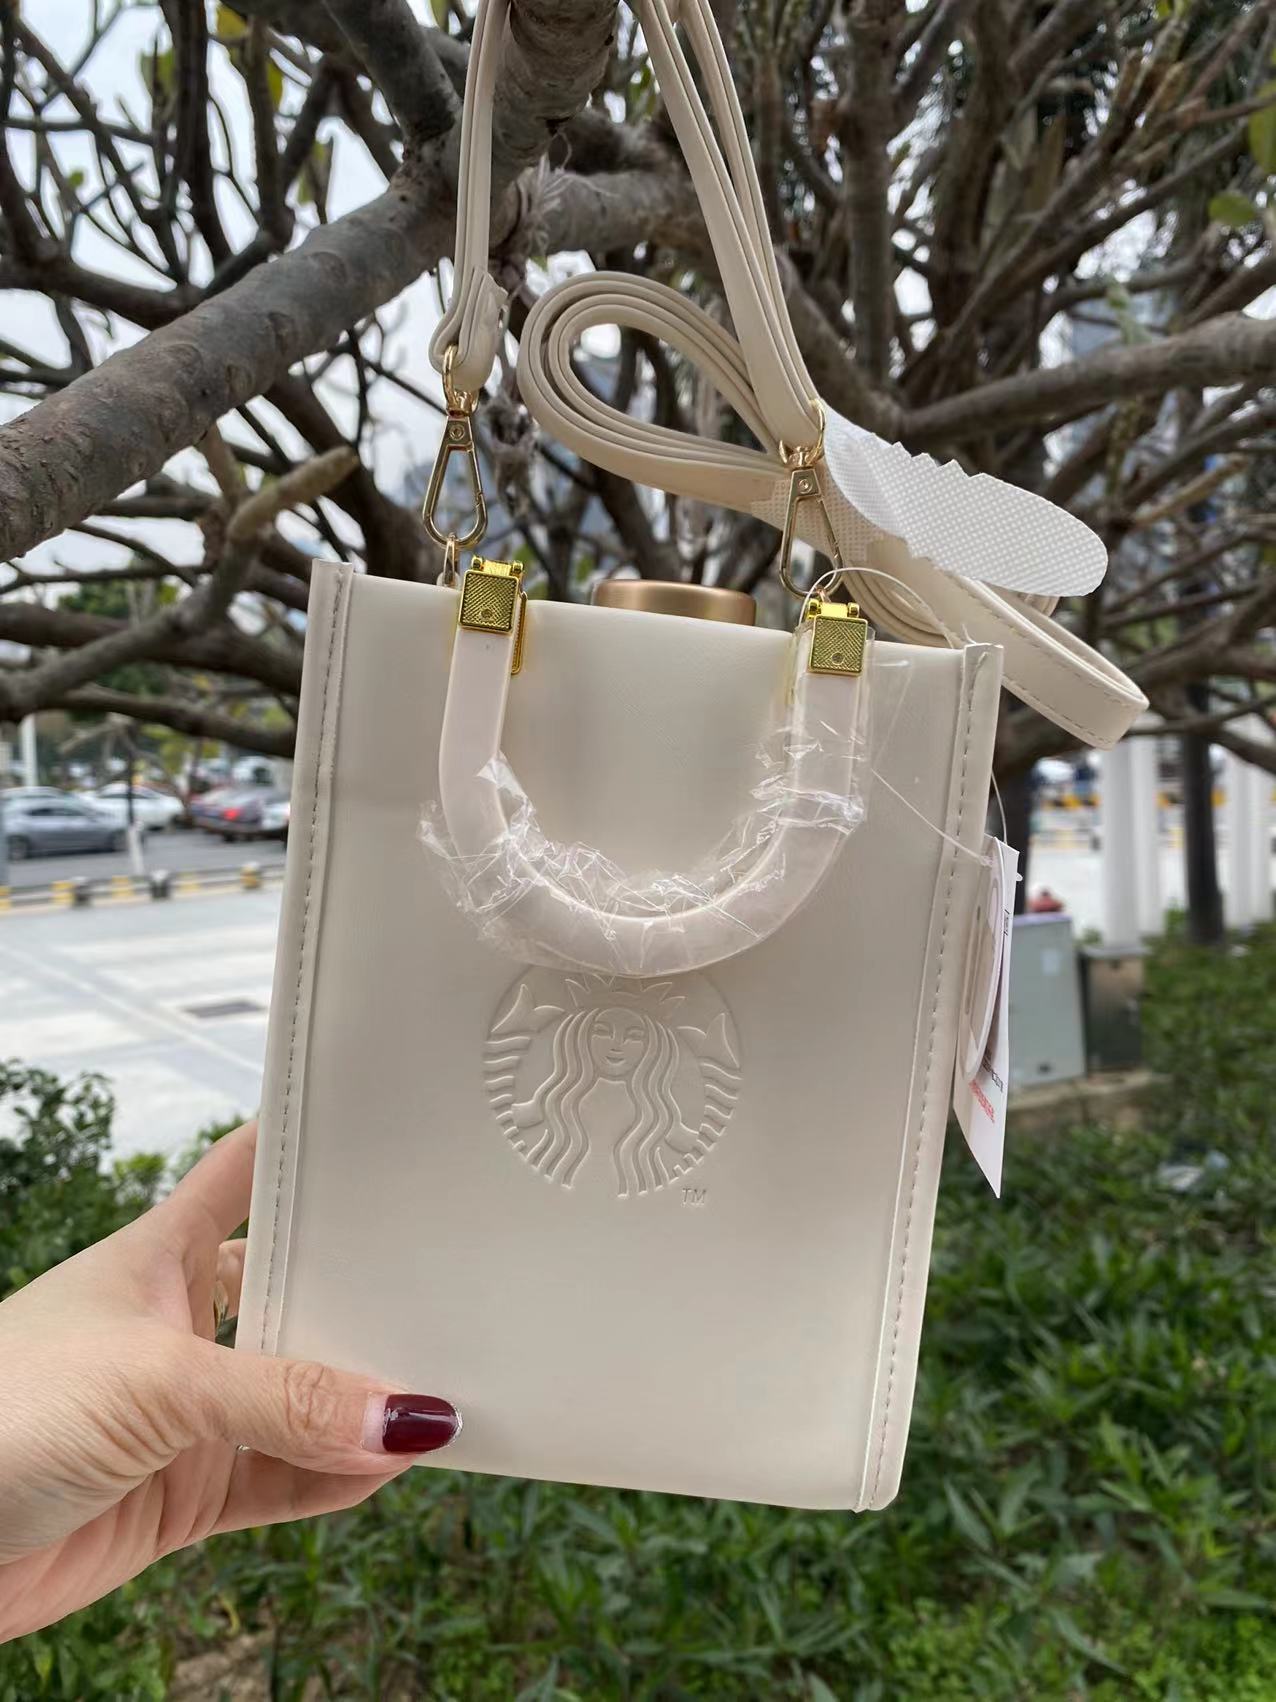 Starbucks Has New Canvas Tote Bags & Steel Tumblers